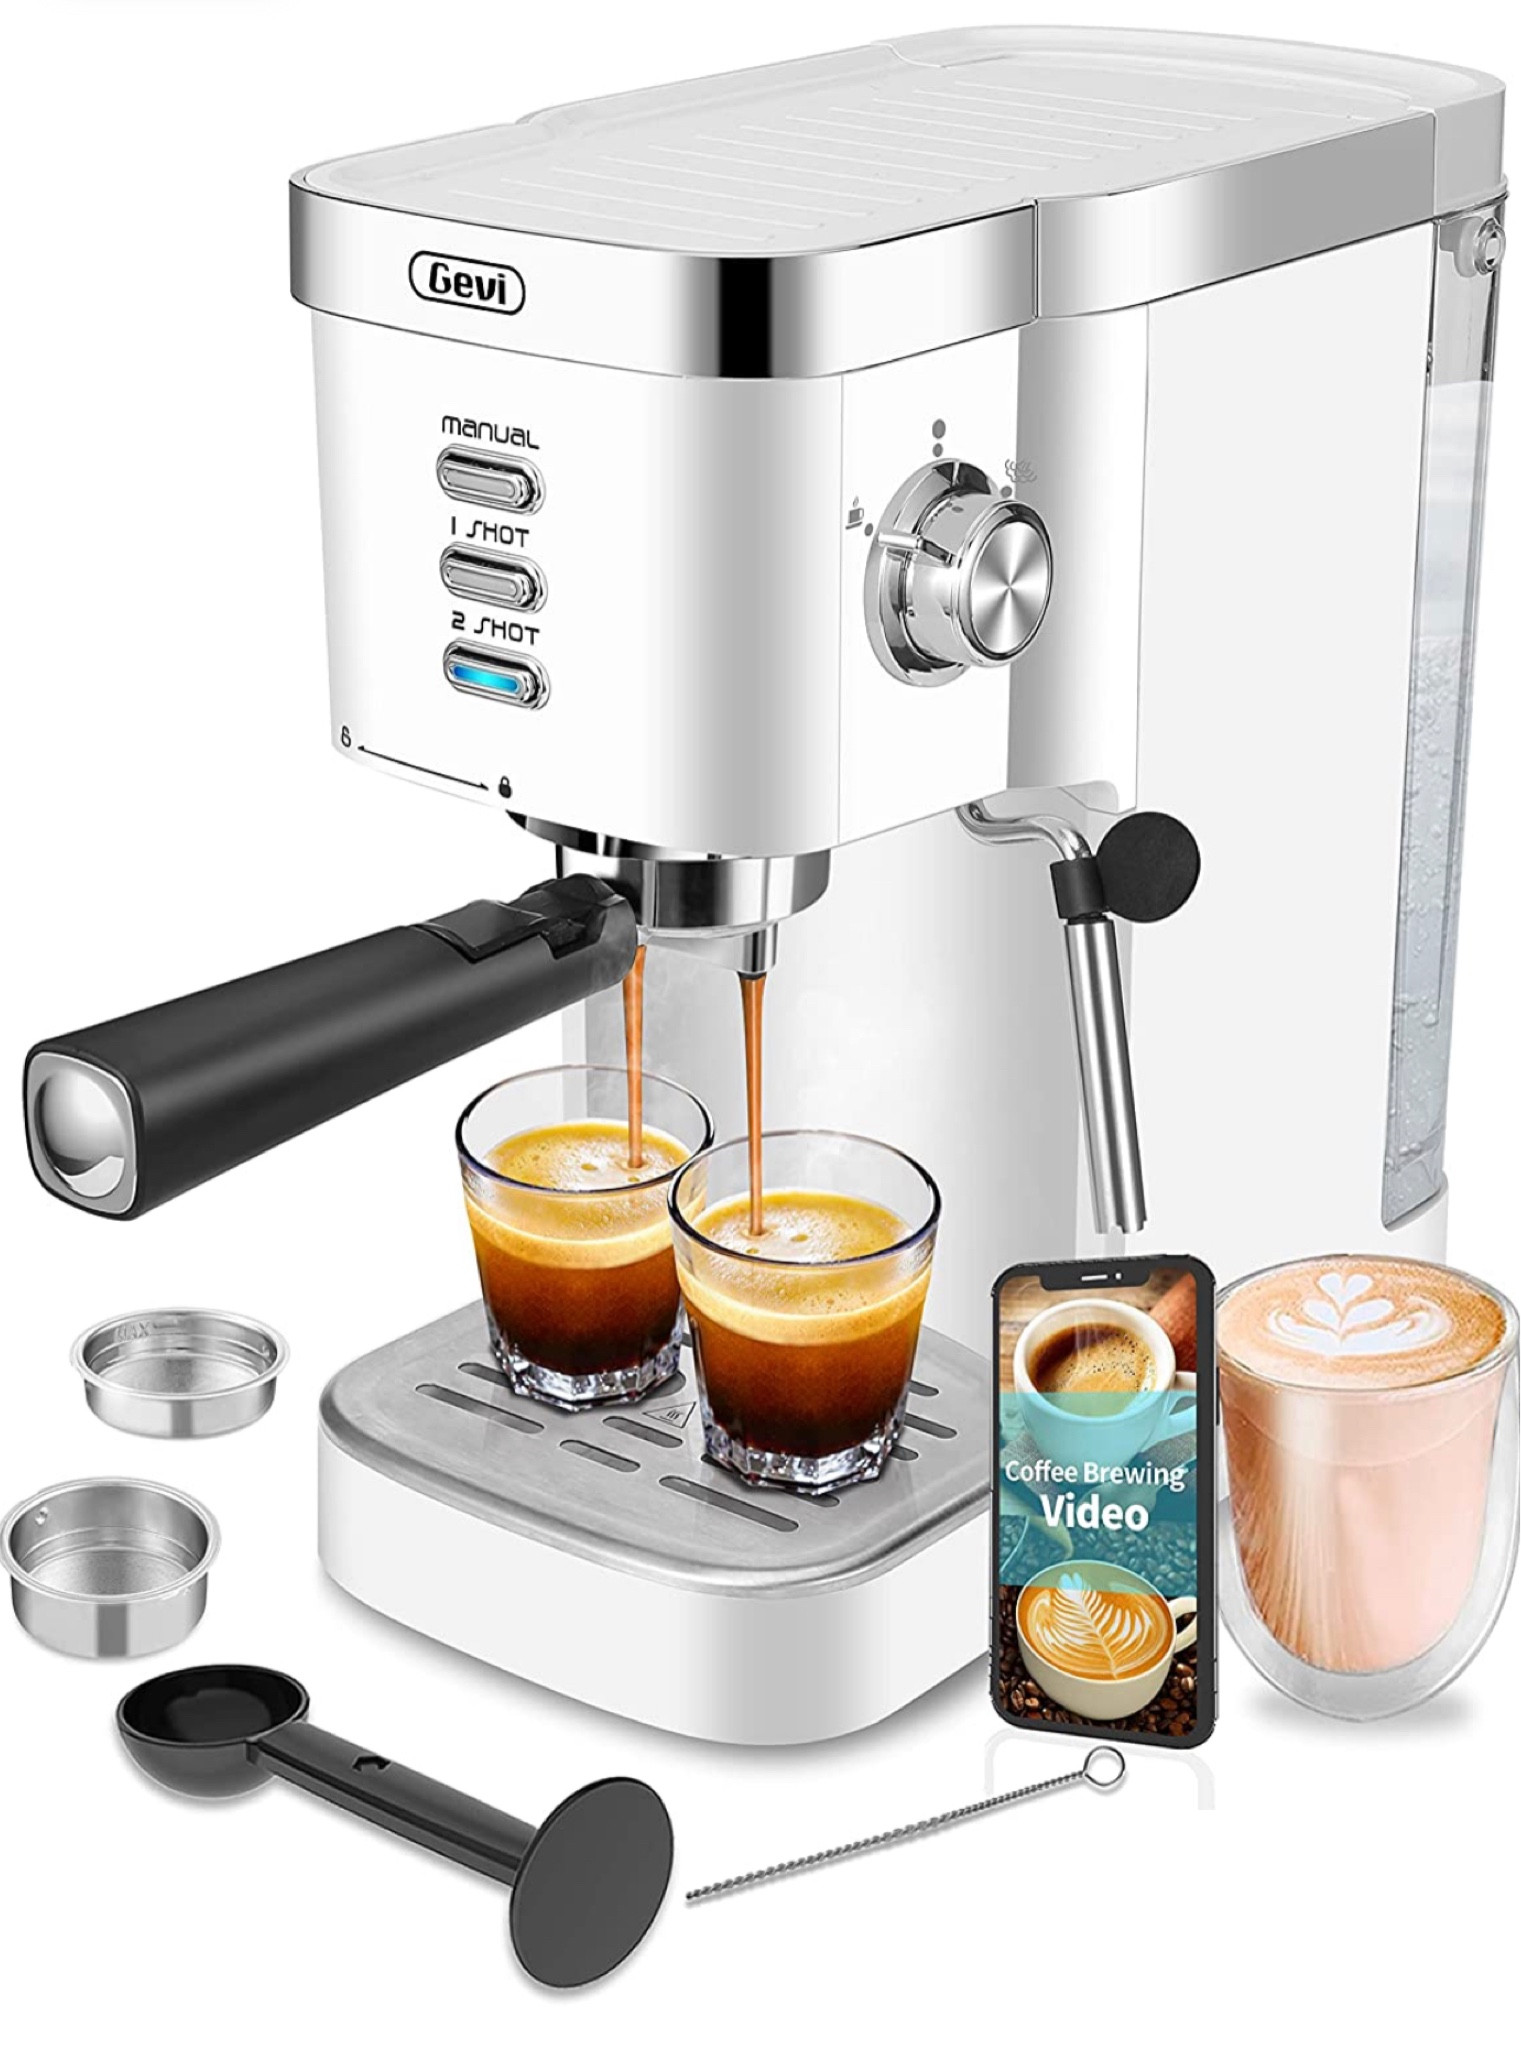 Gevi Espresso Machine 15 Bar with Milk Frother Wand – GEVI